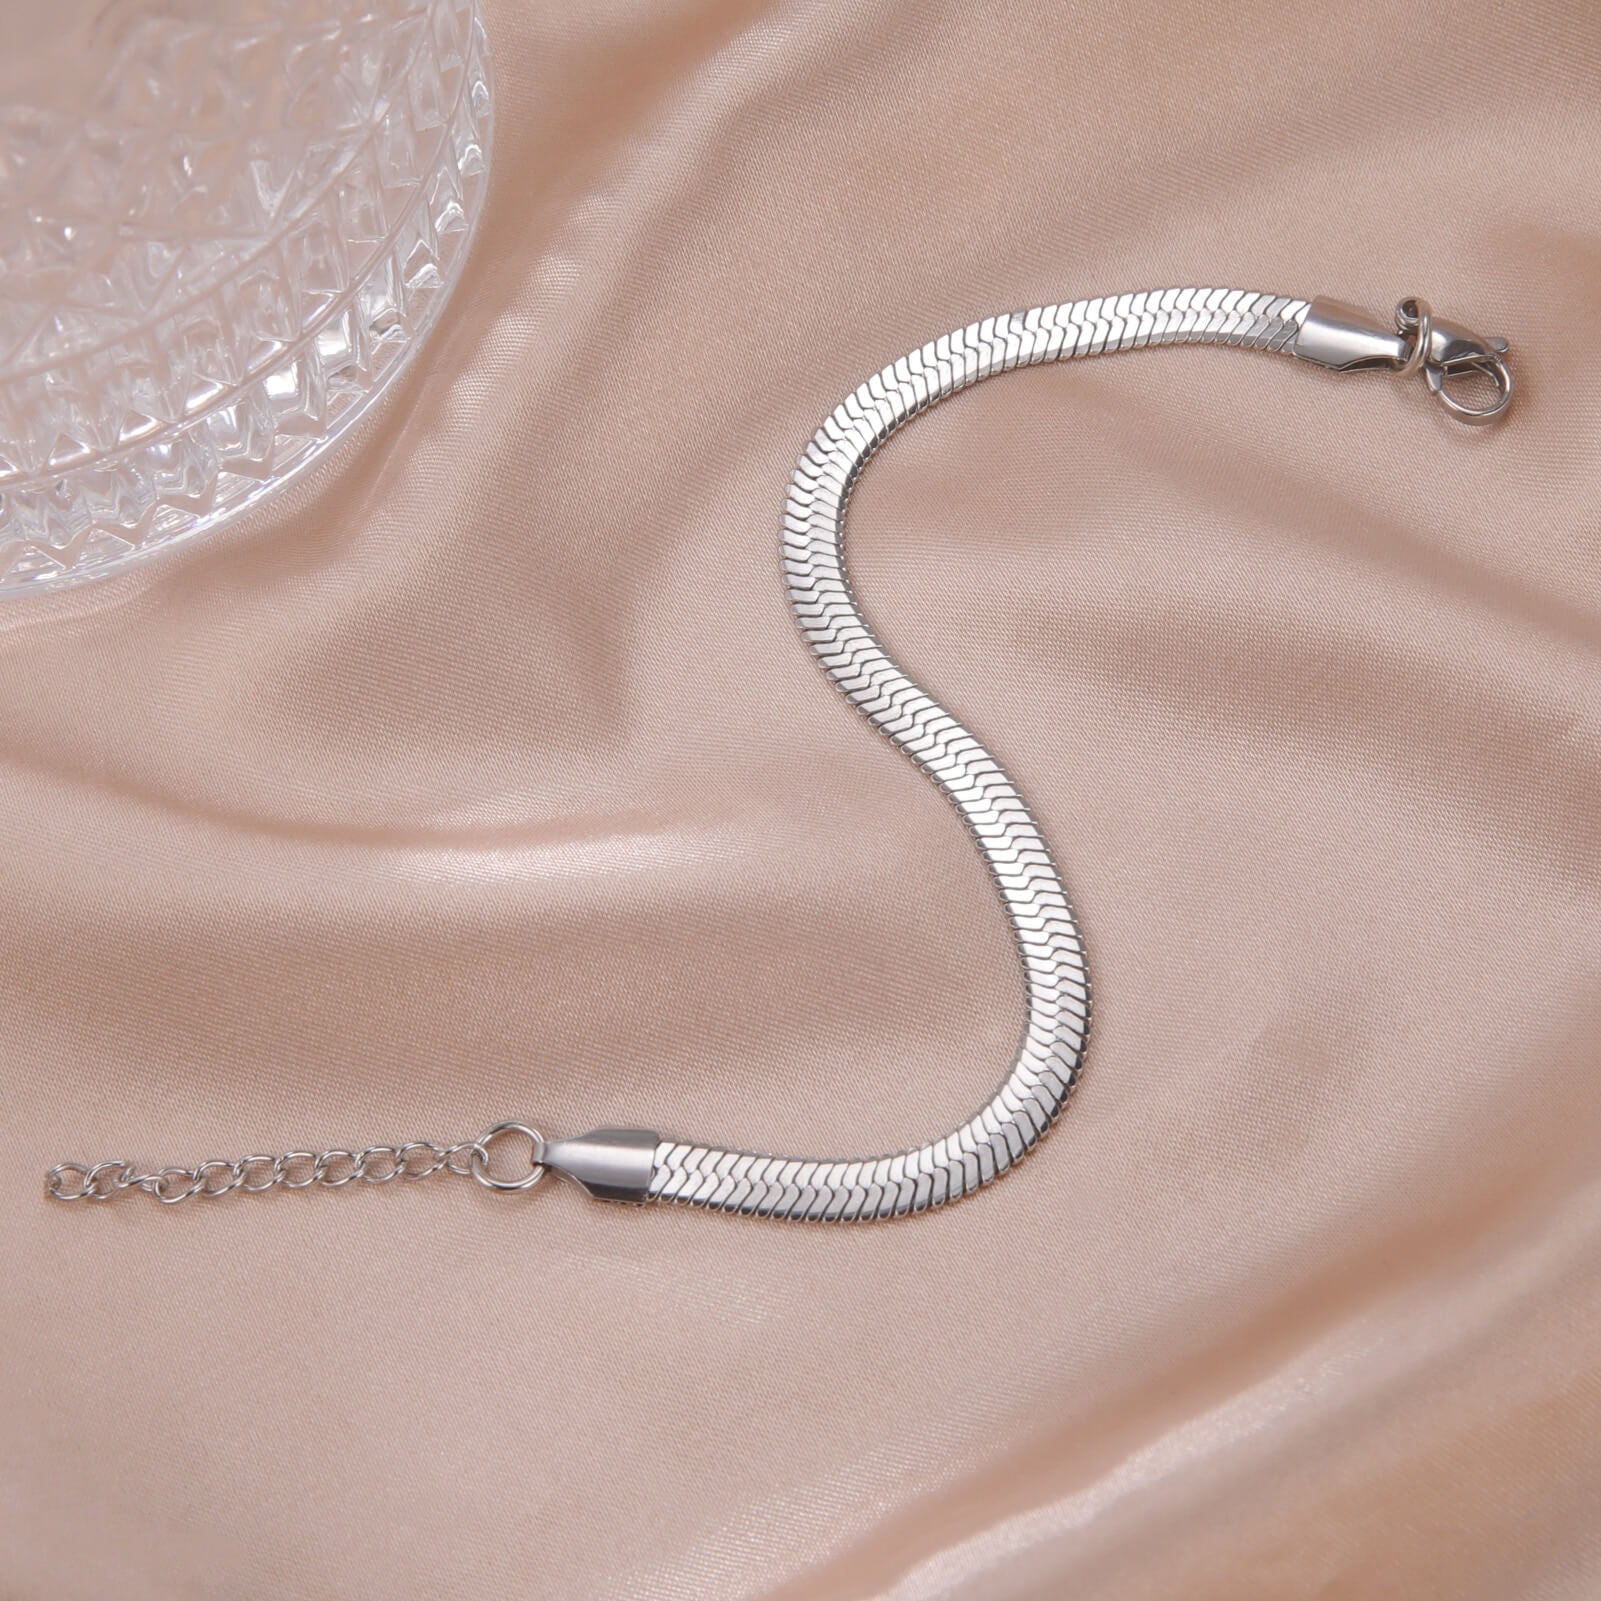 Gold Snake Bracelet for Women Stock Image - Image of luxury, expensive:  89885509